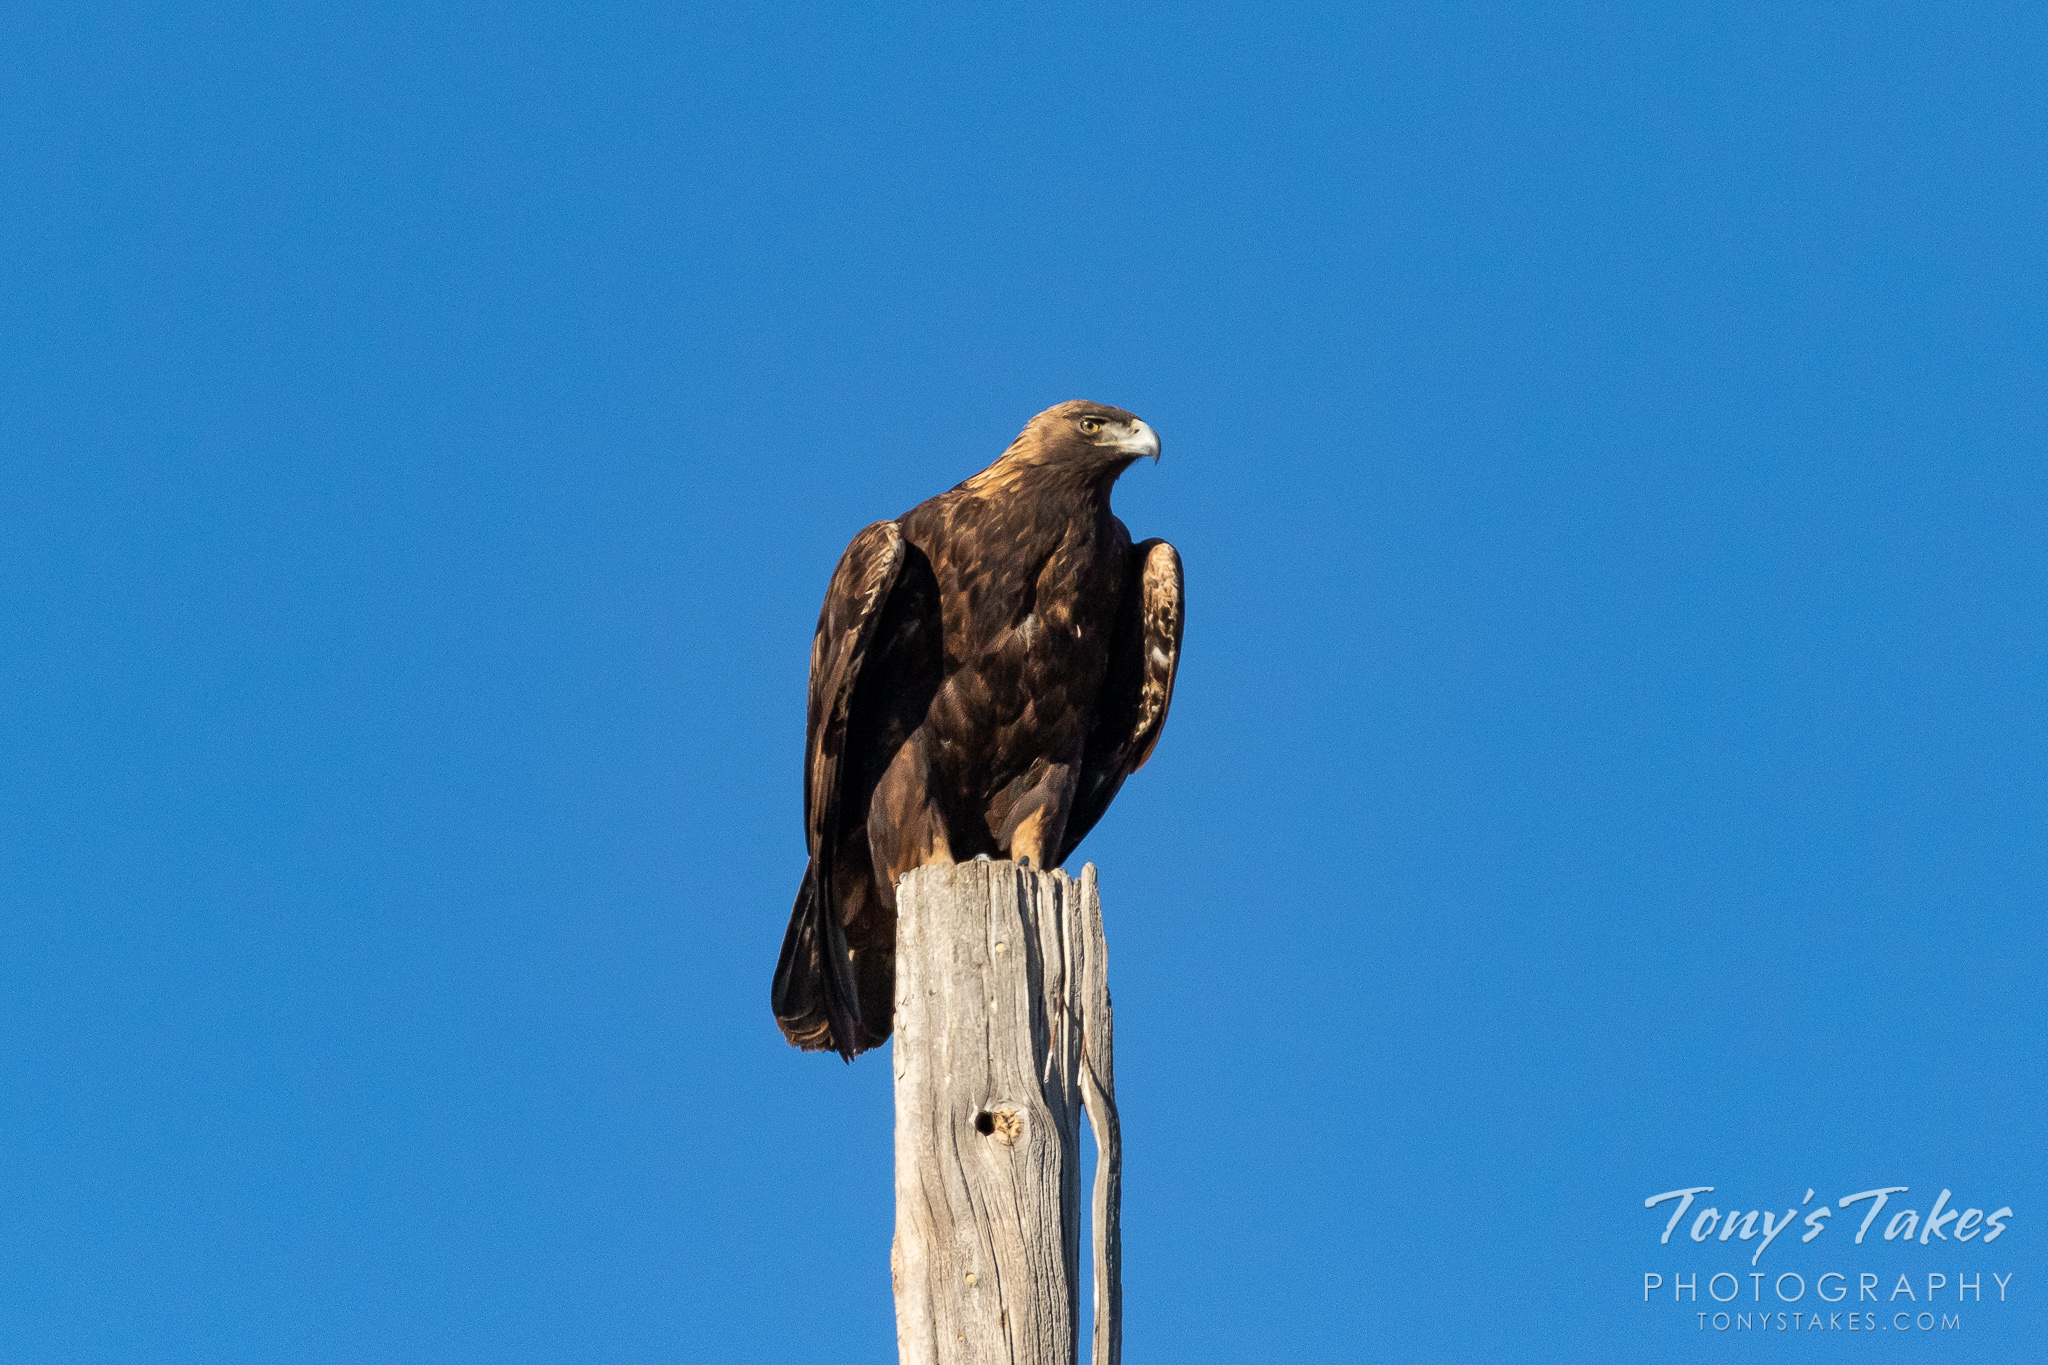 A golden eagle prepares to take flight in Boulder County, Colorado. (© Tony’s Takes)